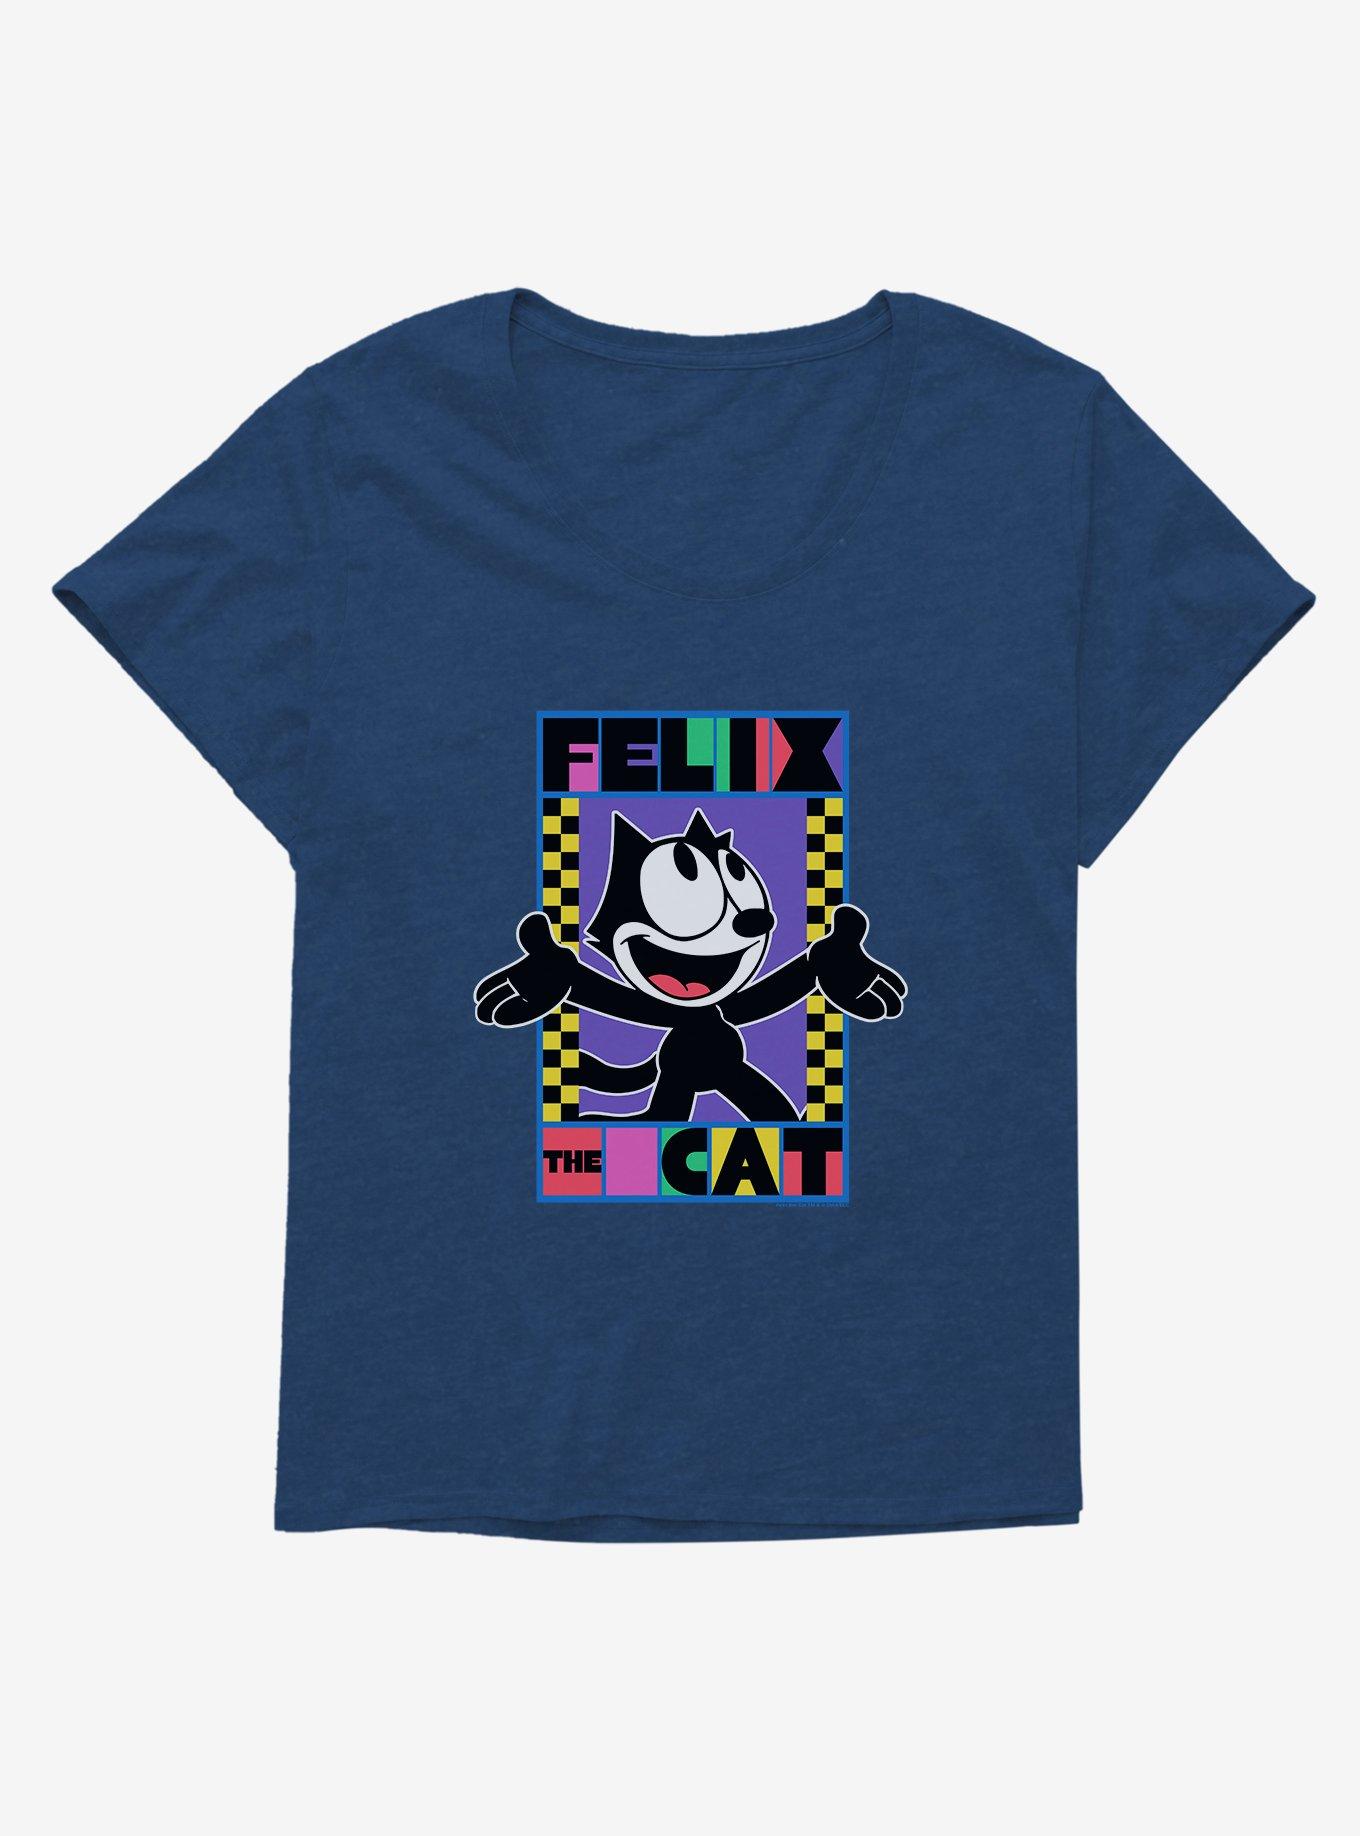 Felix The Cat 90s Checkers Graphic Girls T-Shirt Plus